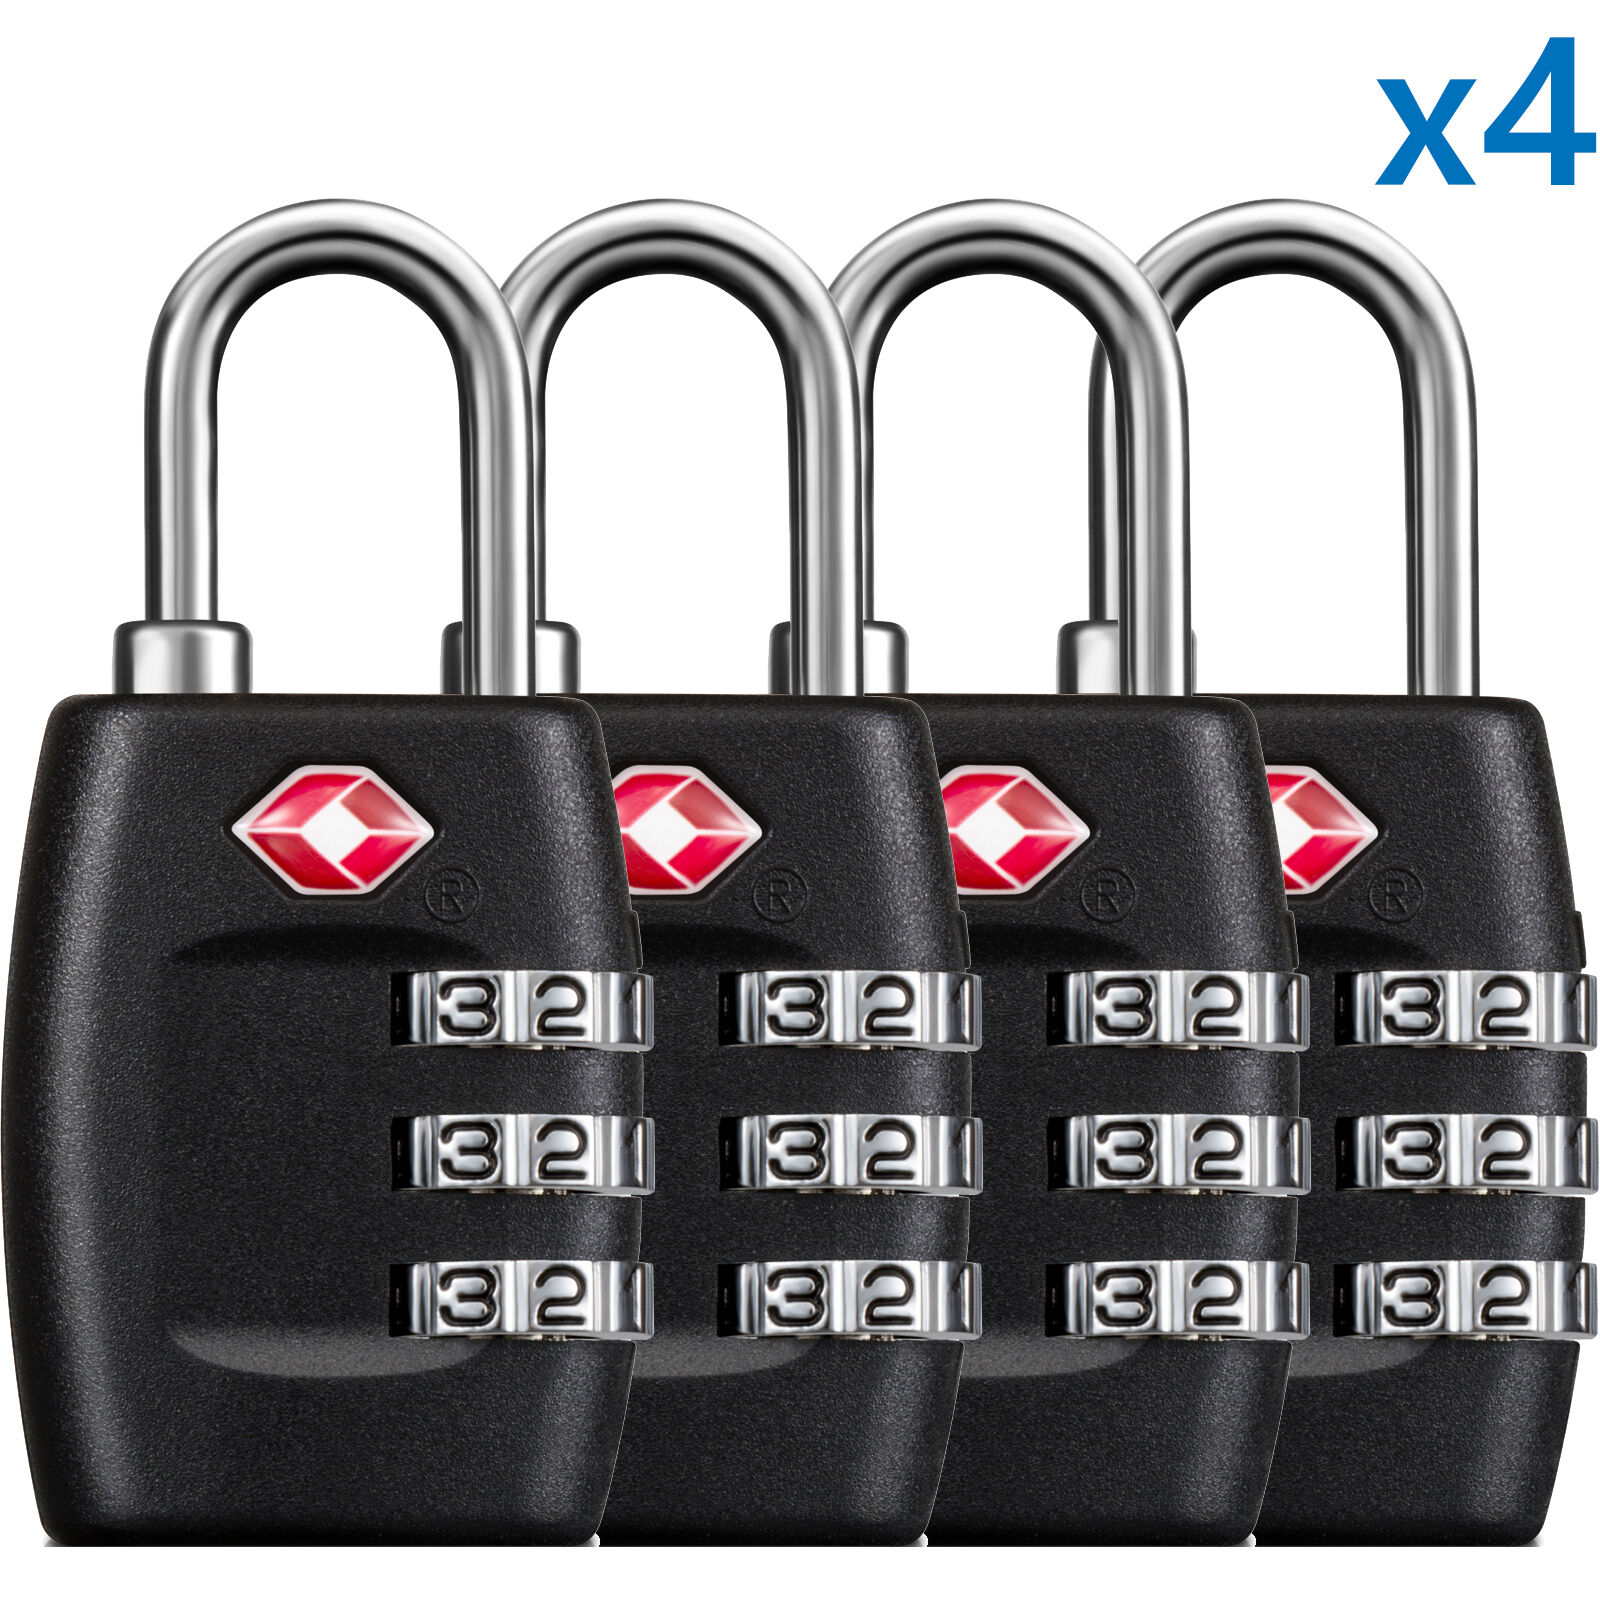 Bg 4 X Tsa Lock Travel Luggage 3 Digit Combination Resettable New Tl01 (4 Pcs)